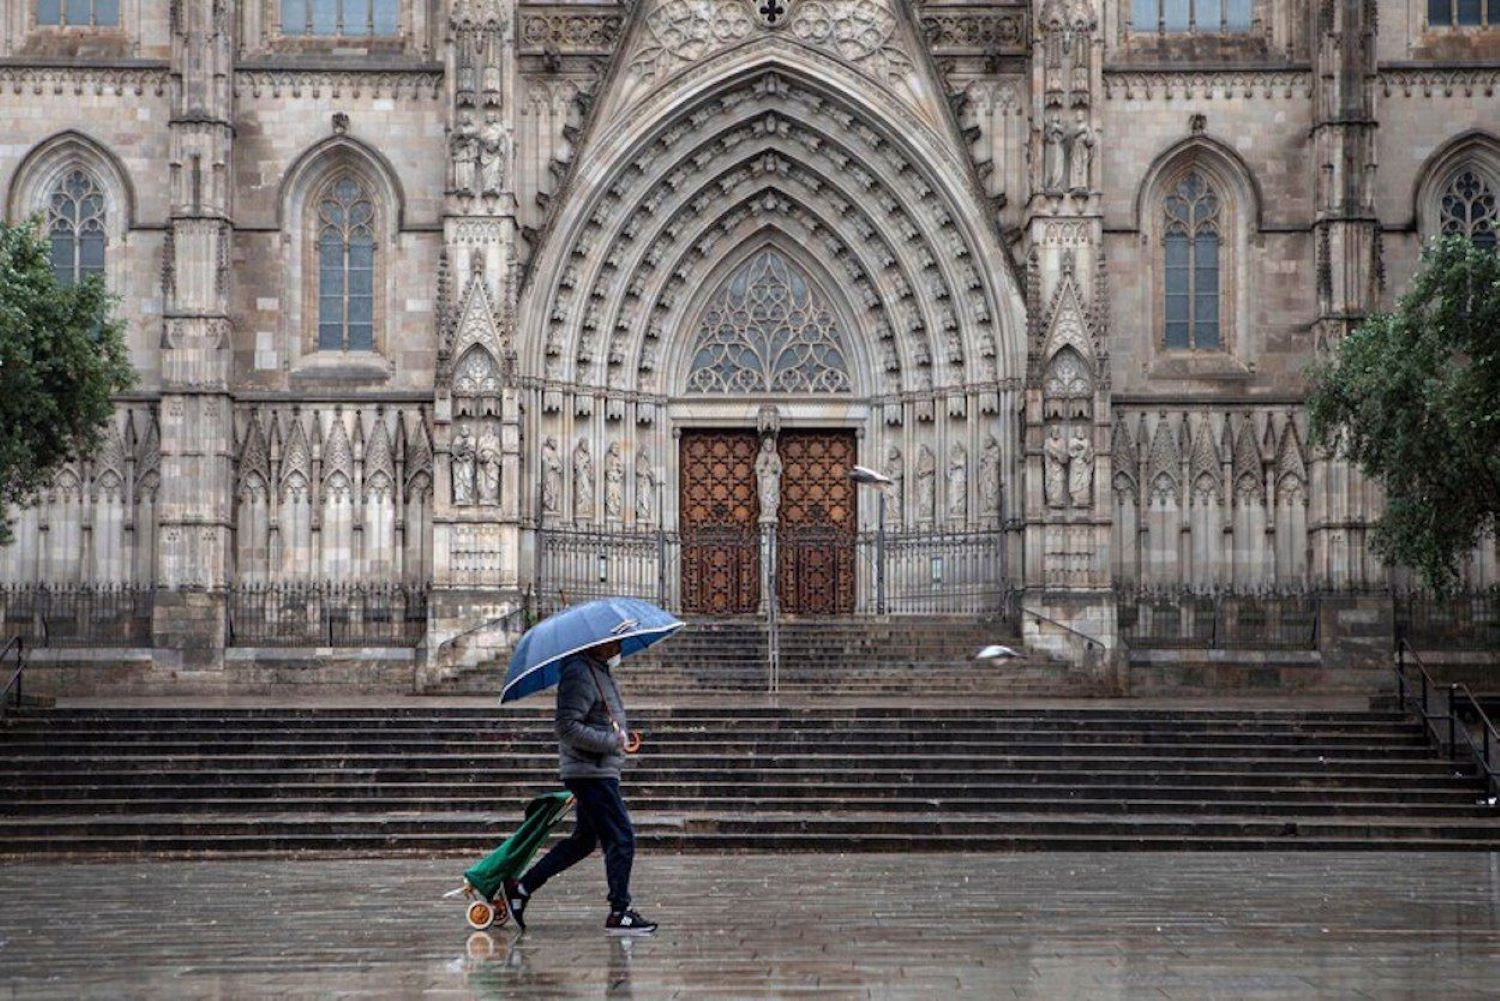 La Plaza de la Catedral de Barcelona durante una jornada de lluvia / EFE